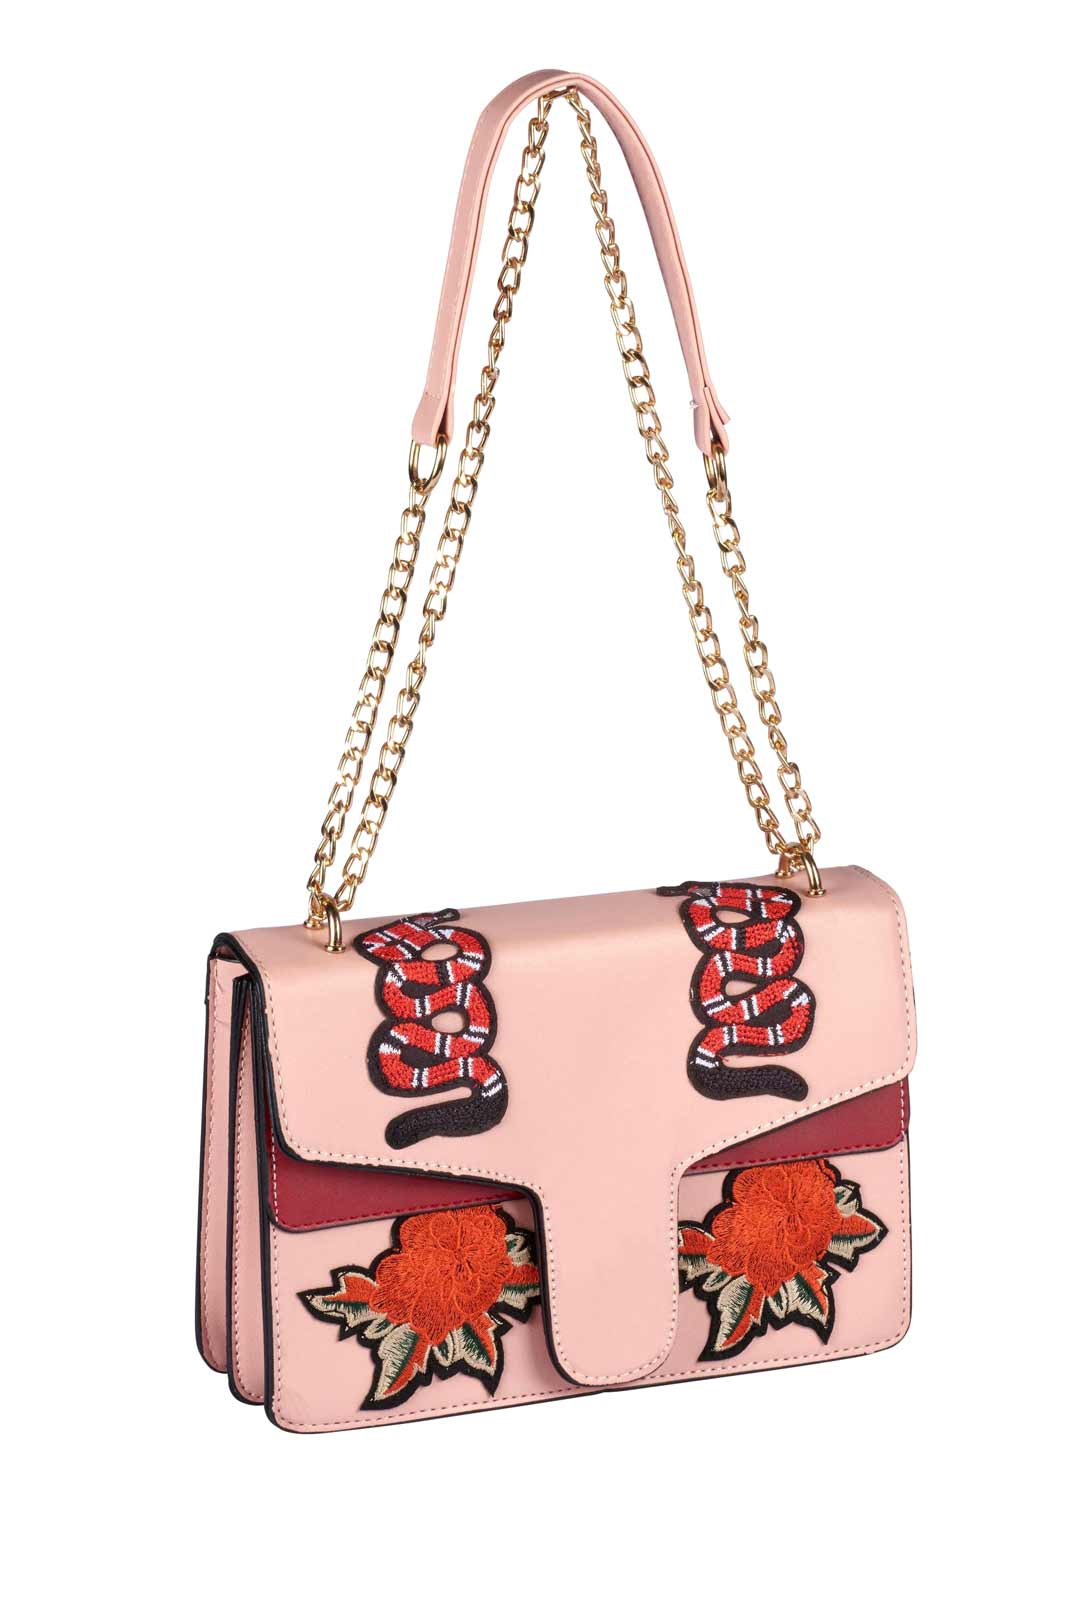 Sweet Deluxe Damen Marken-Handtasche mit Patches, rosé